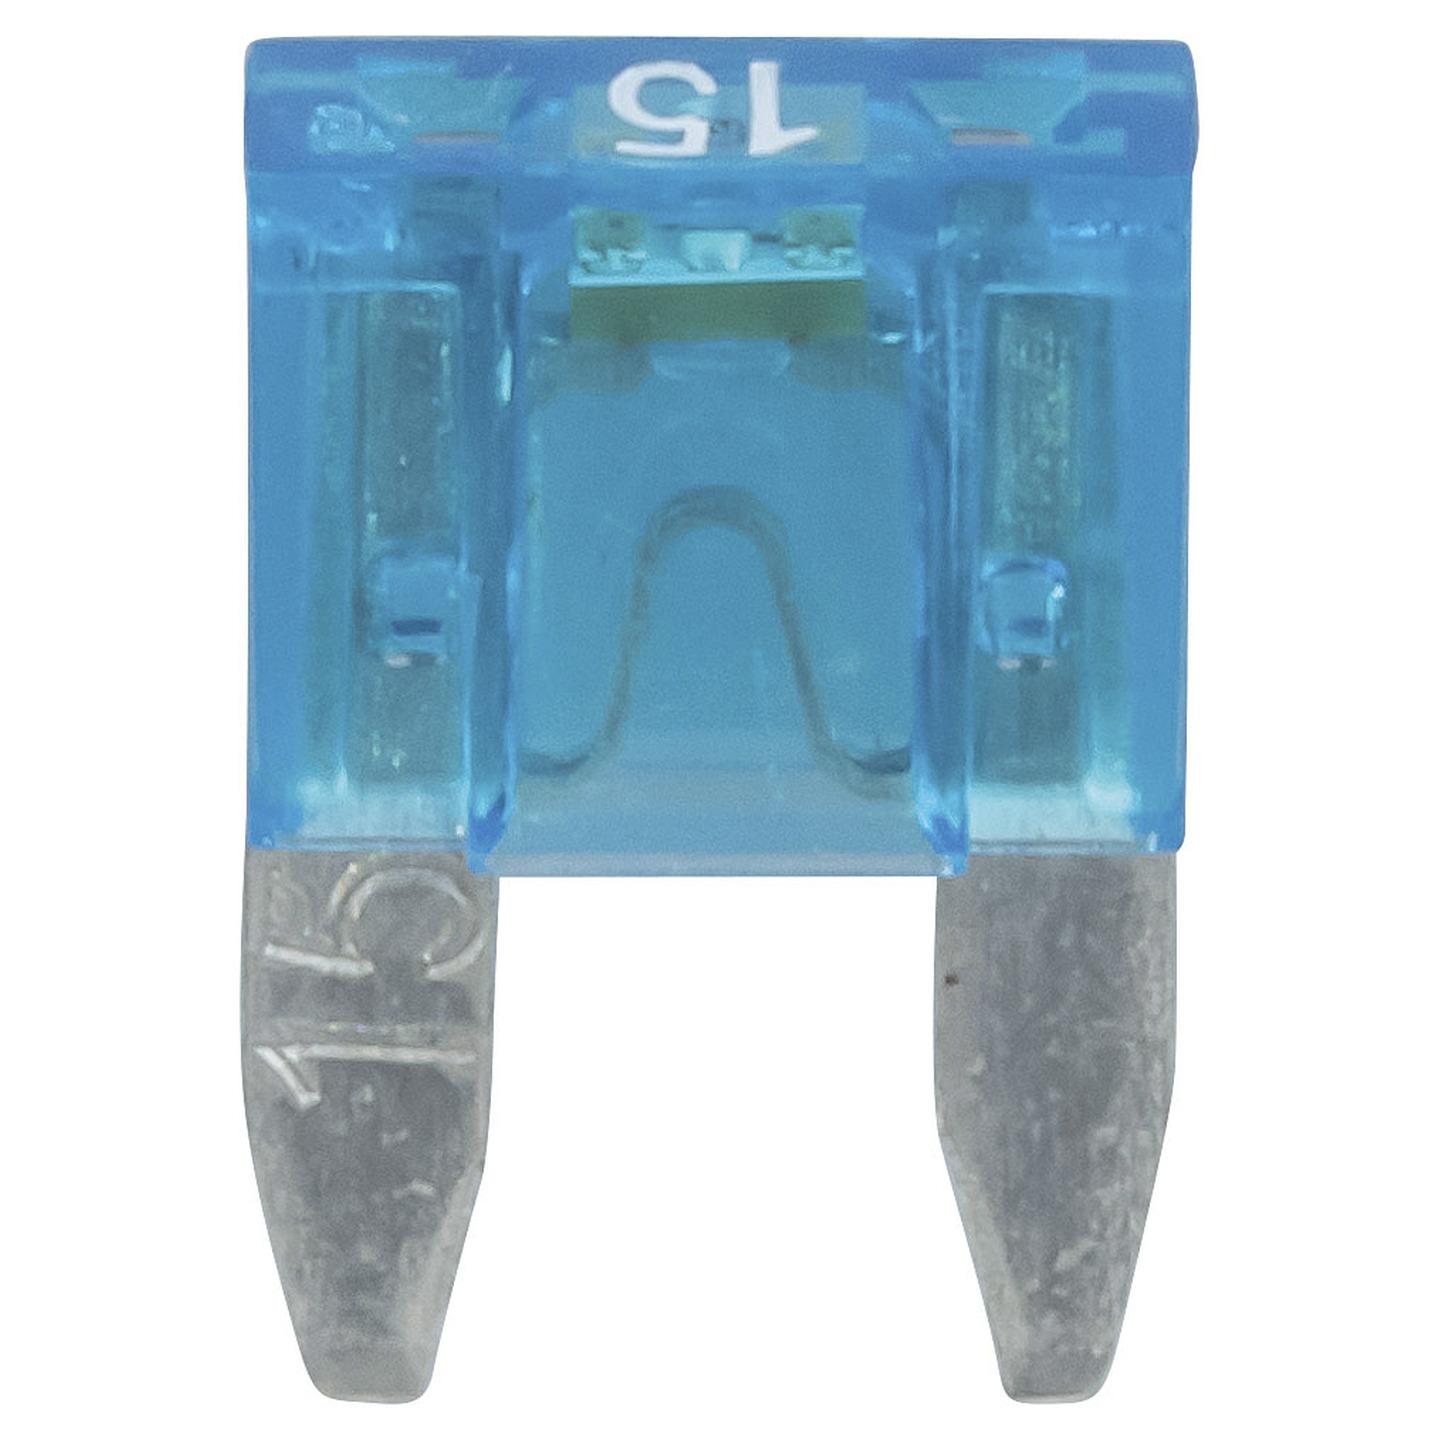 15A Blue Mini Blade Fuse with LED Indicator